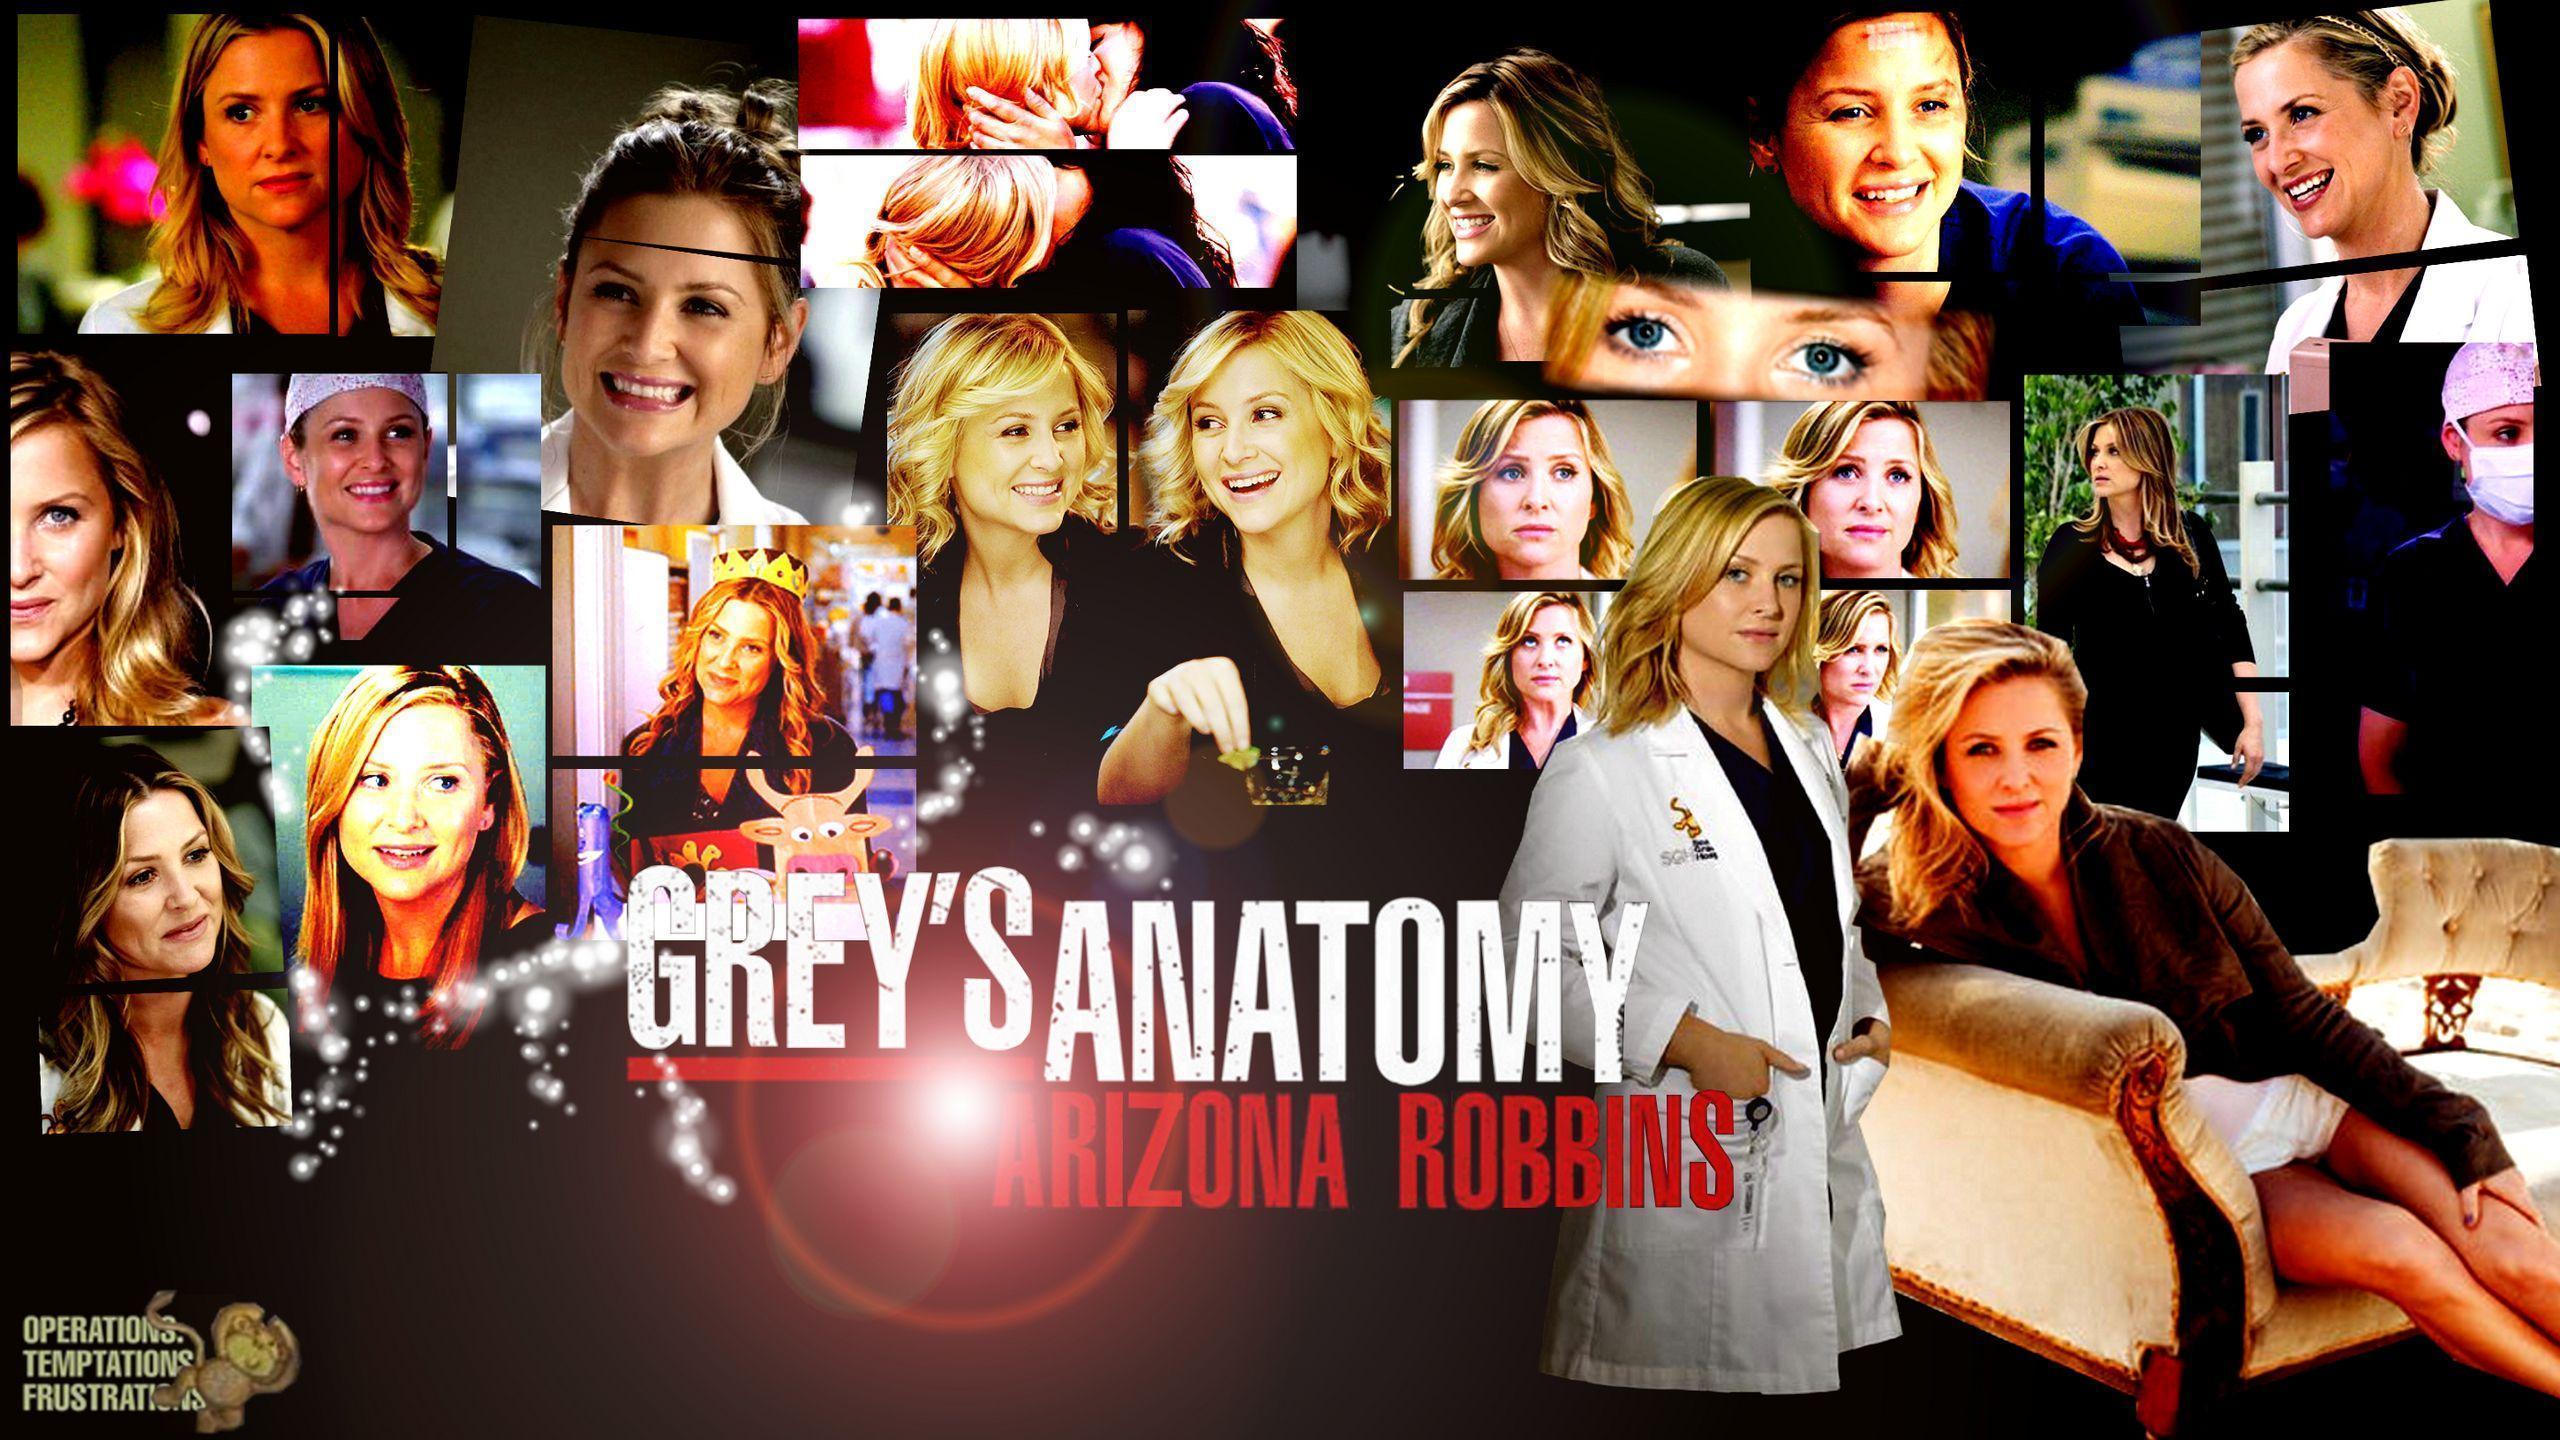 Best image about Grey's Anatomy. Seasons, TVs